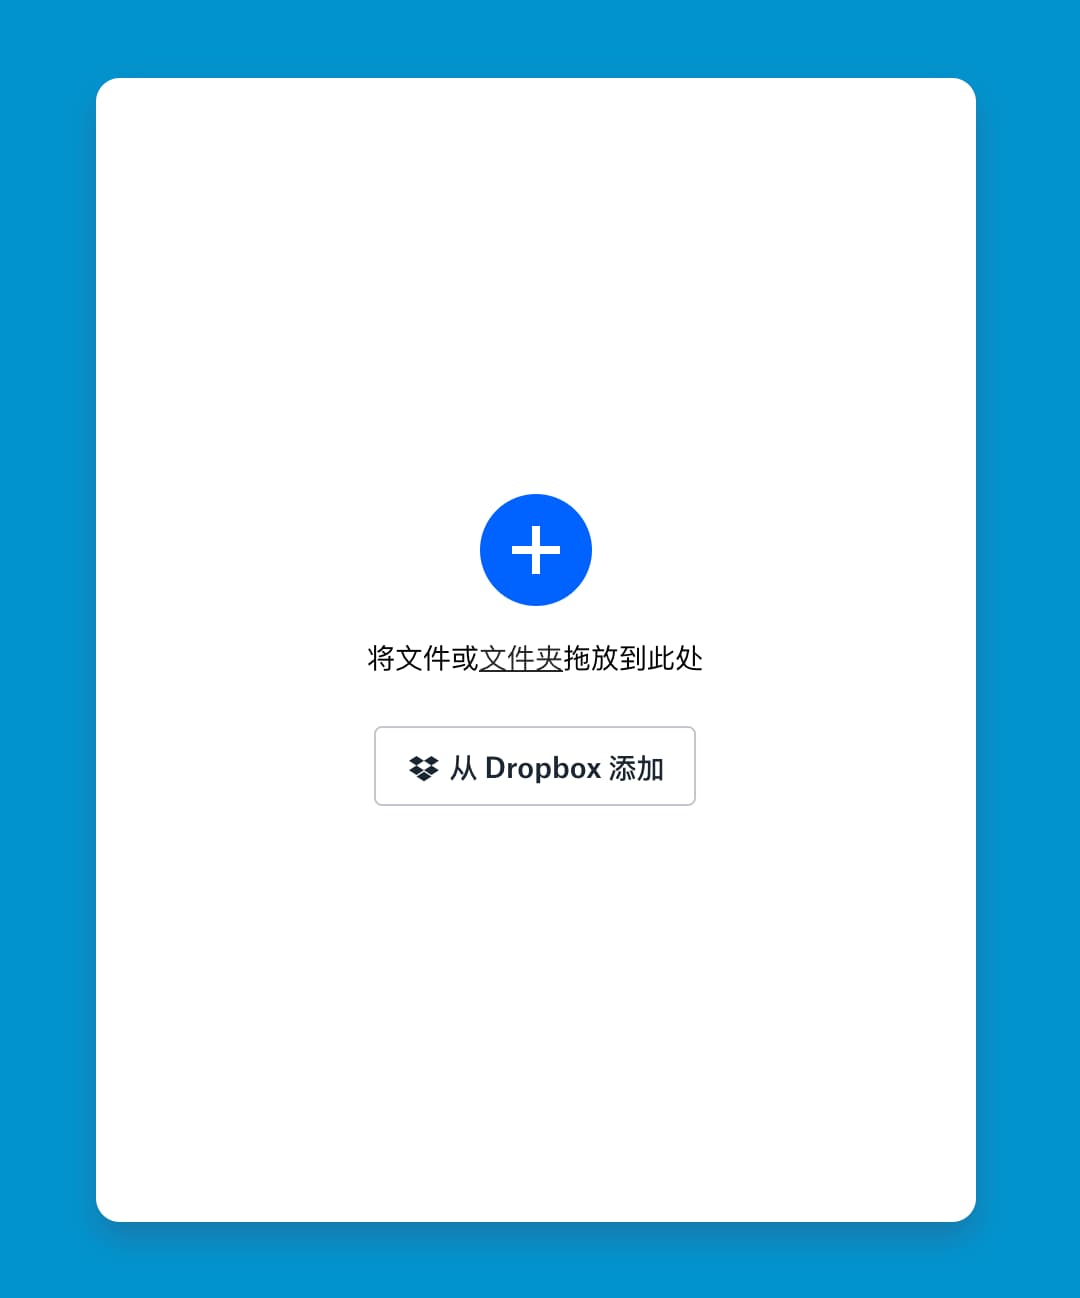 Dropbox Transfer 正式发布，付费用户可传输最多 100G 文件给陌生人 2